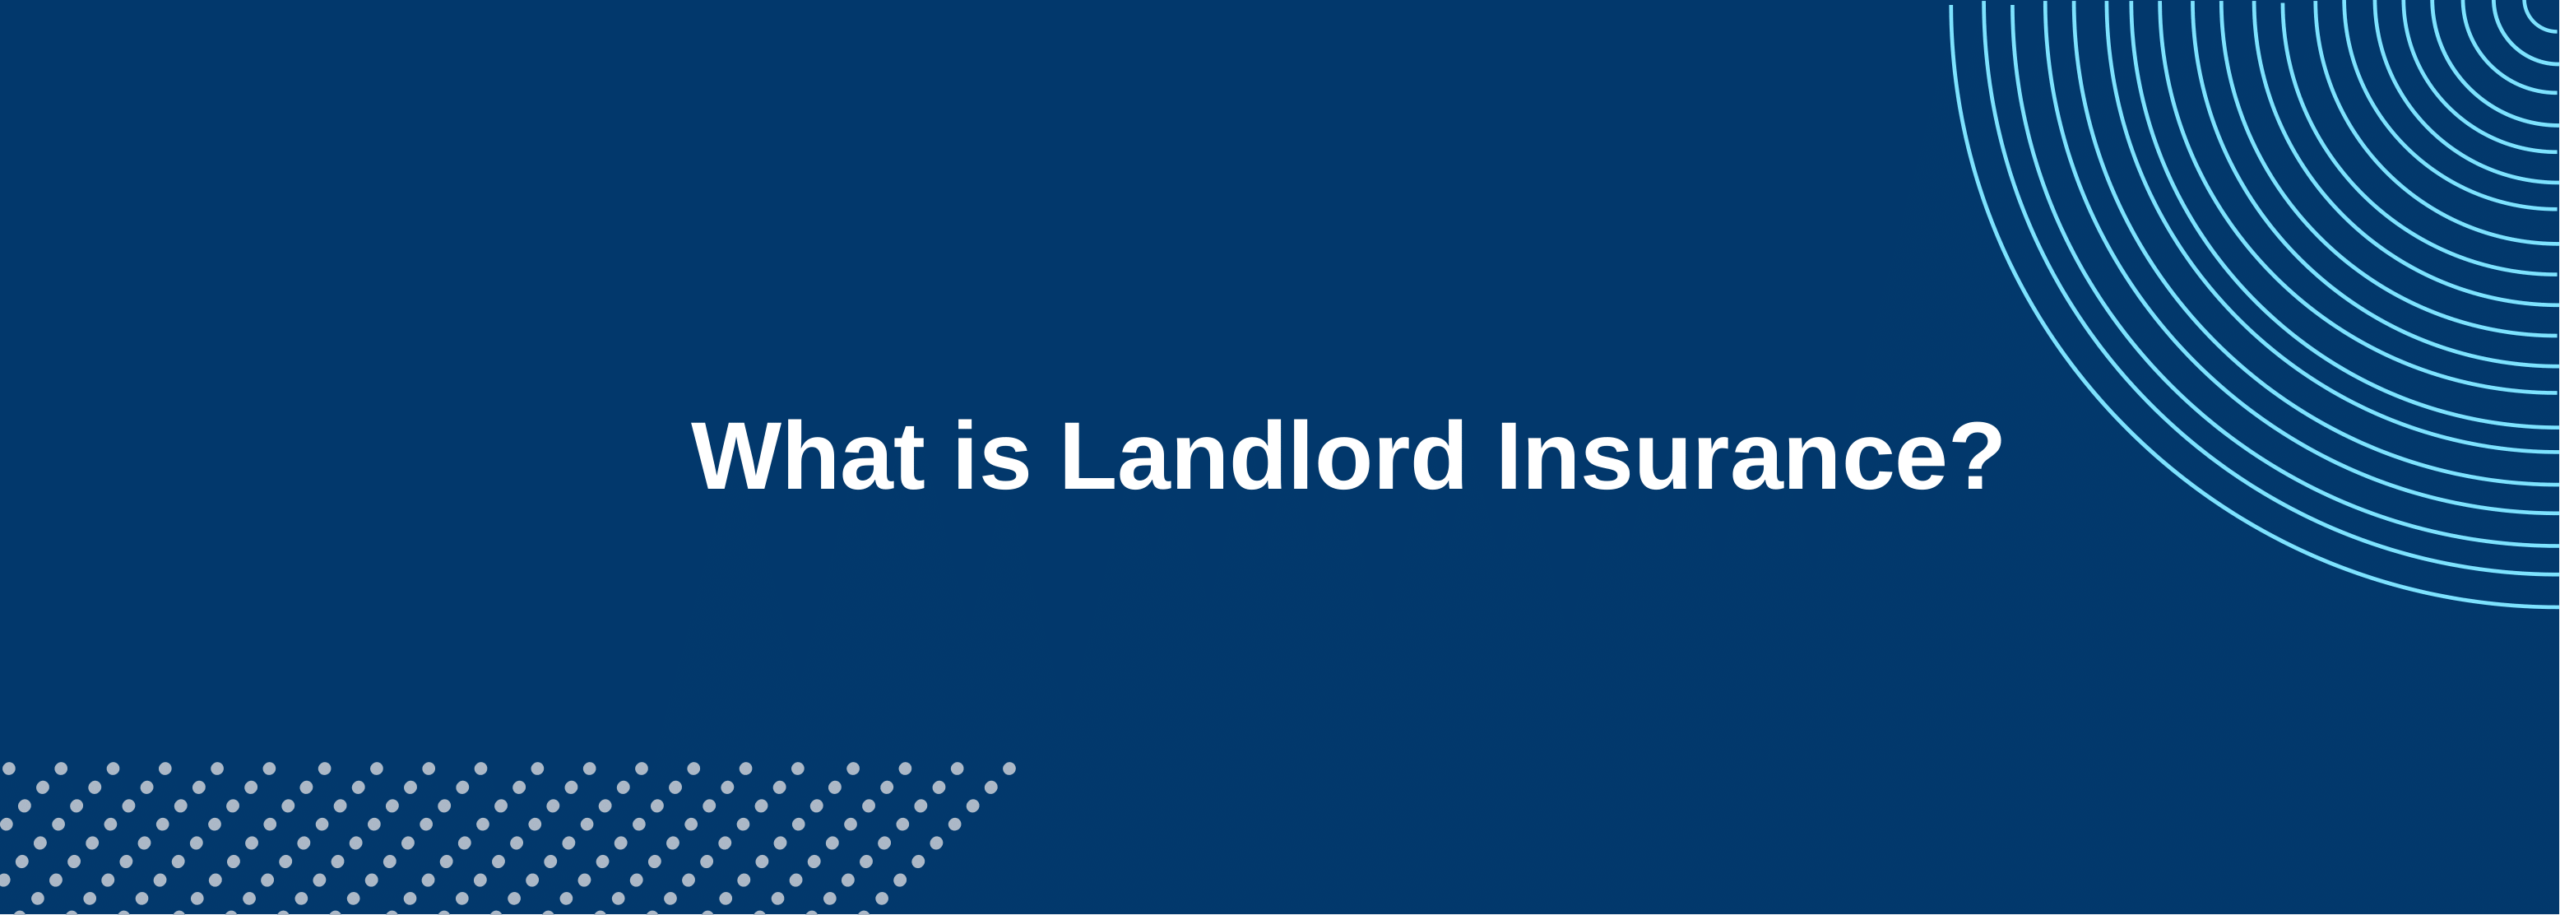 Landlord Insurance